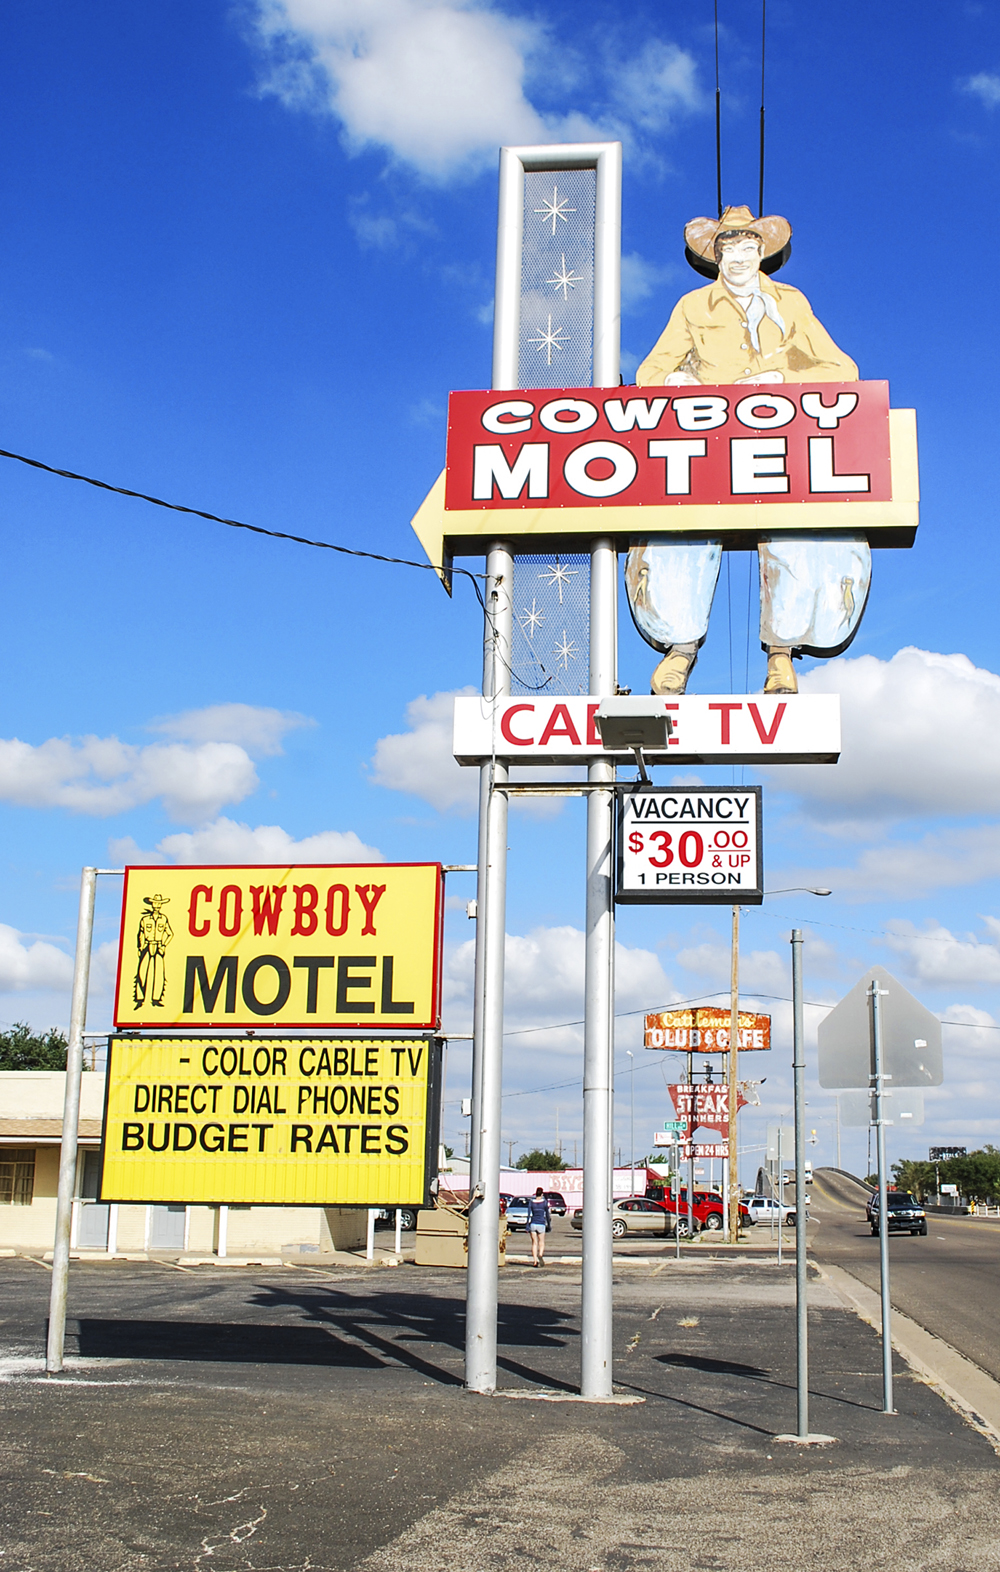 photograph of the Cowboy Motel in Amarillo Texas